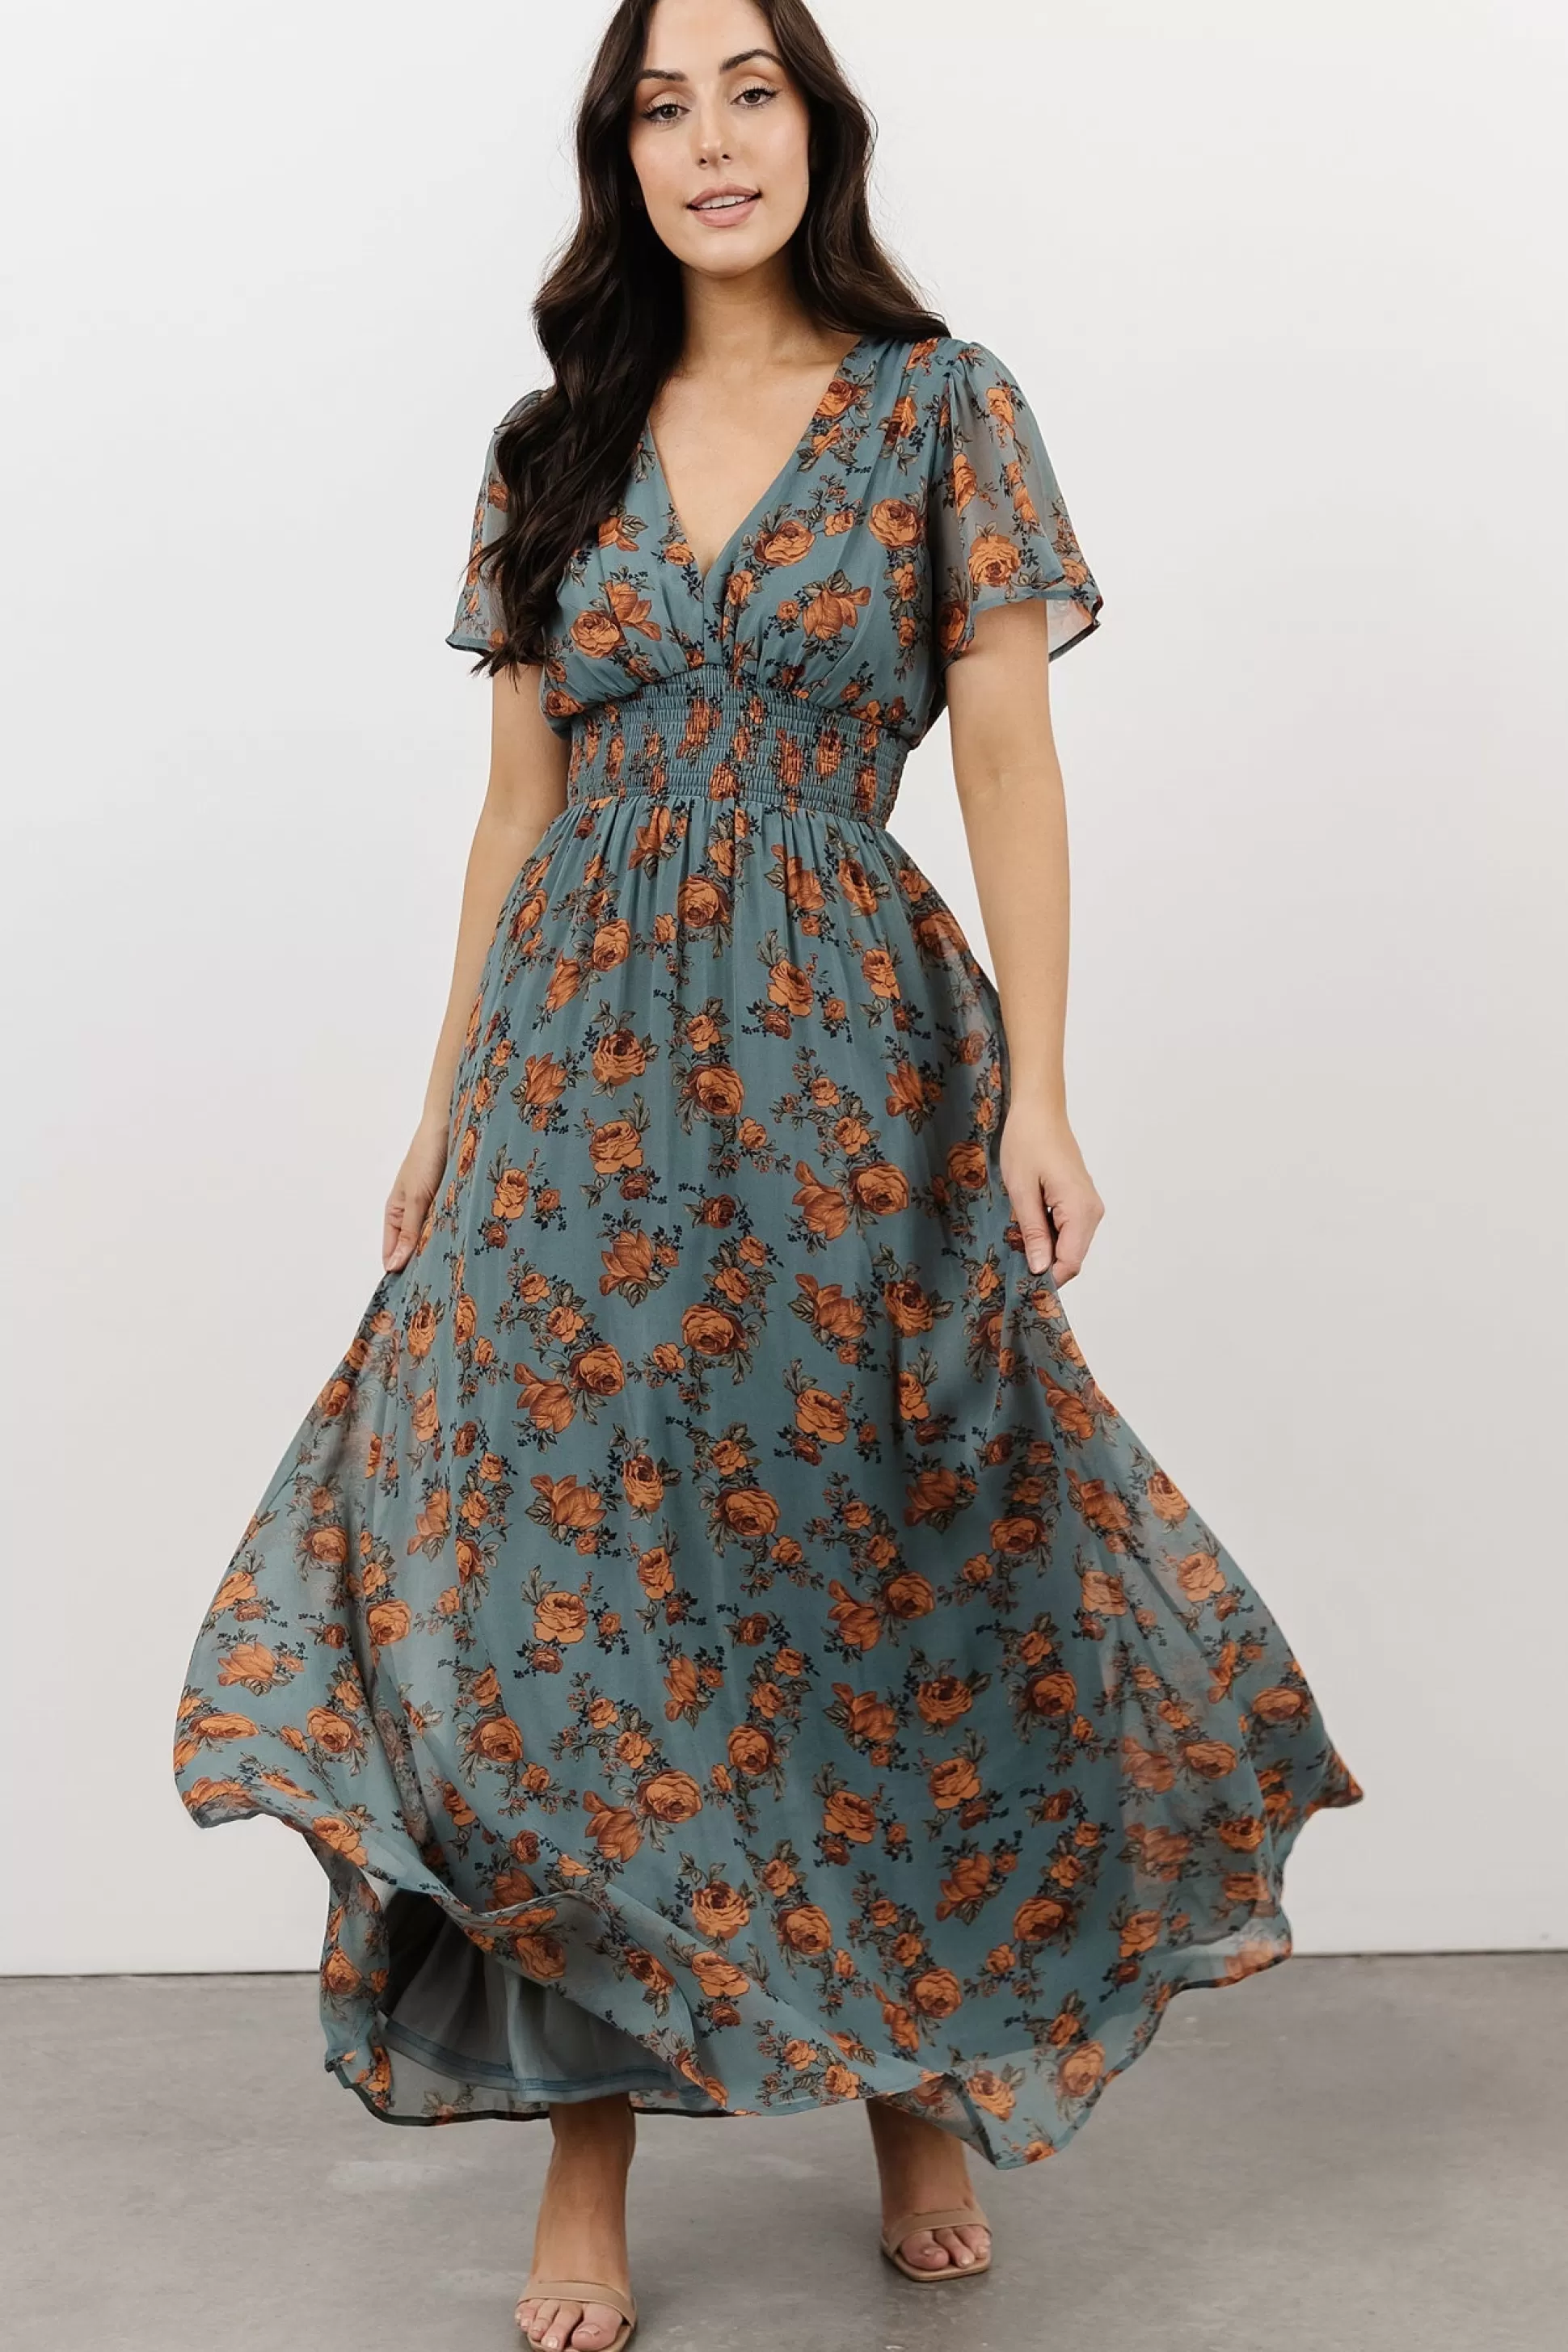 DRESSES | maxi dresses | Baltic Born Birdie Maxi Dress | Dusty Blue Floral